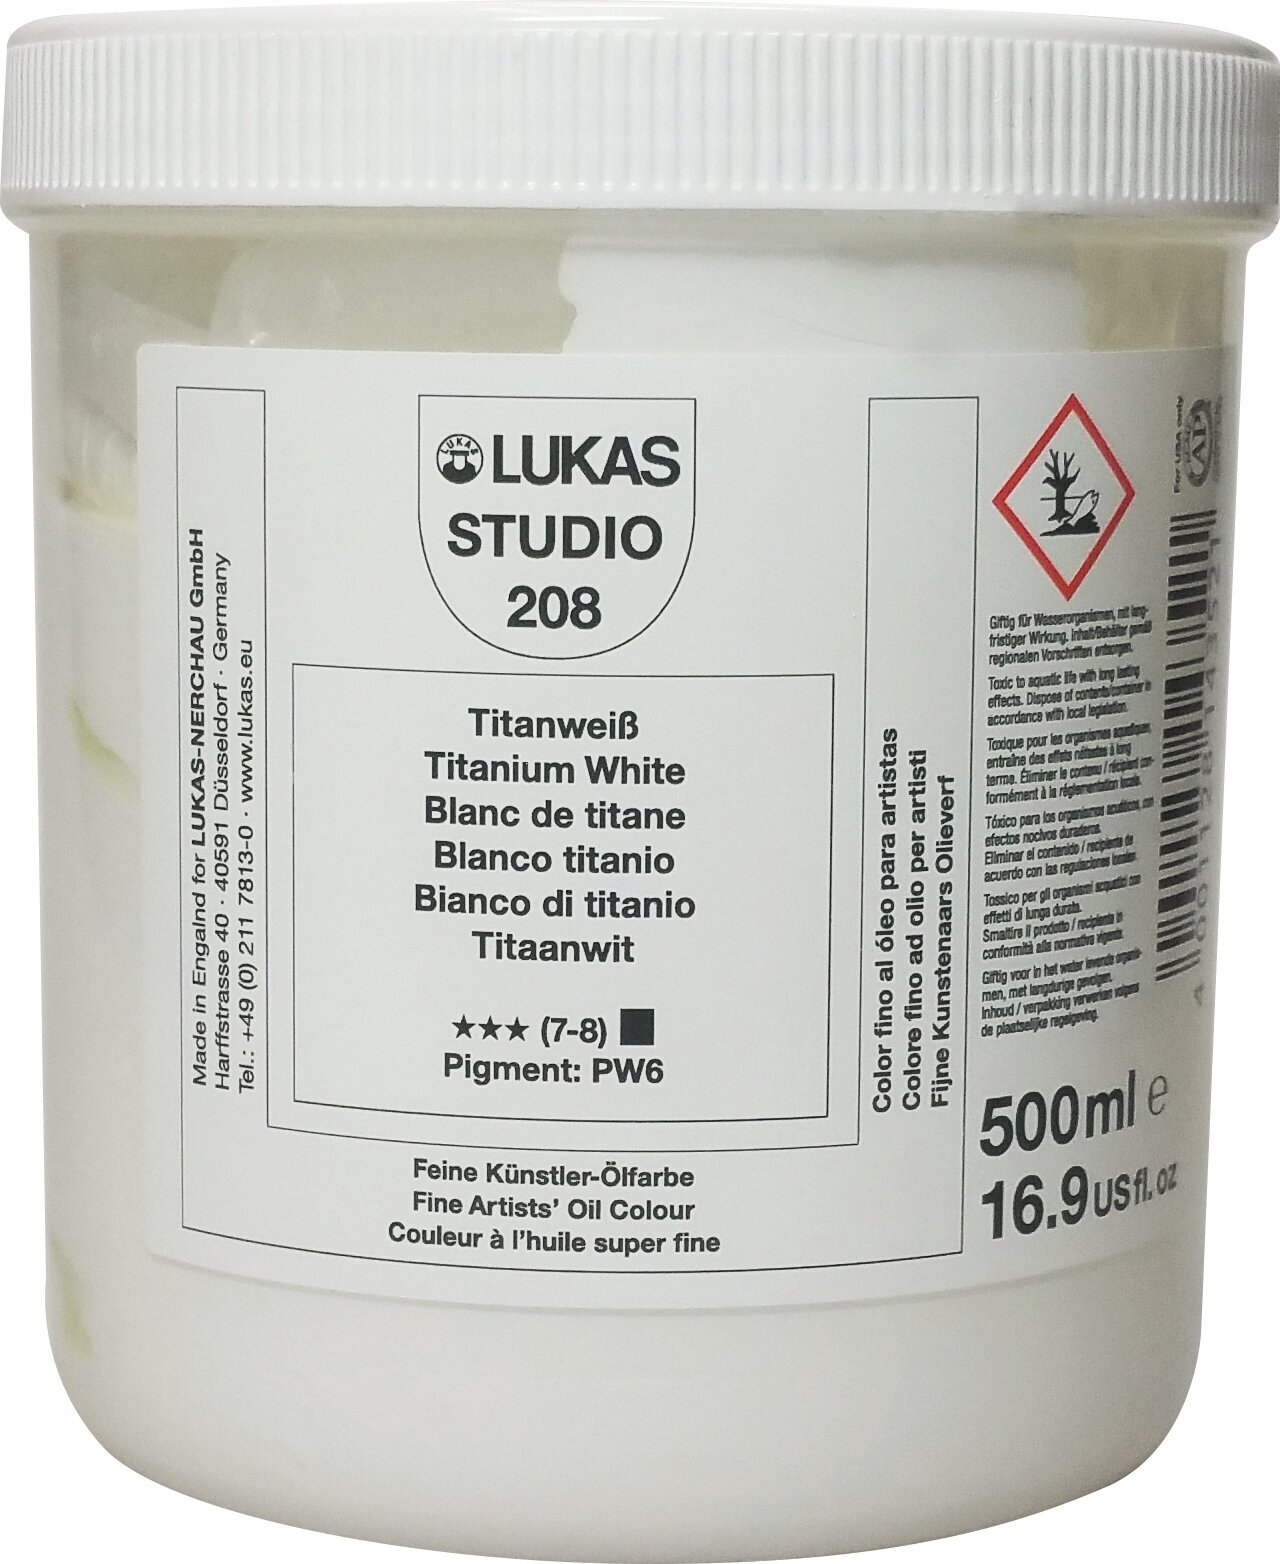 Oil colour Lukas Studio Oil Paint 500 ml Titanium White